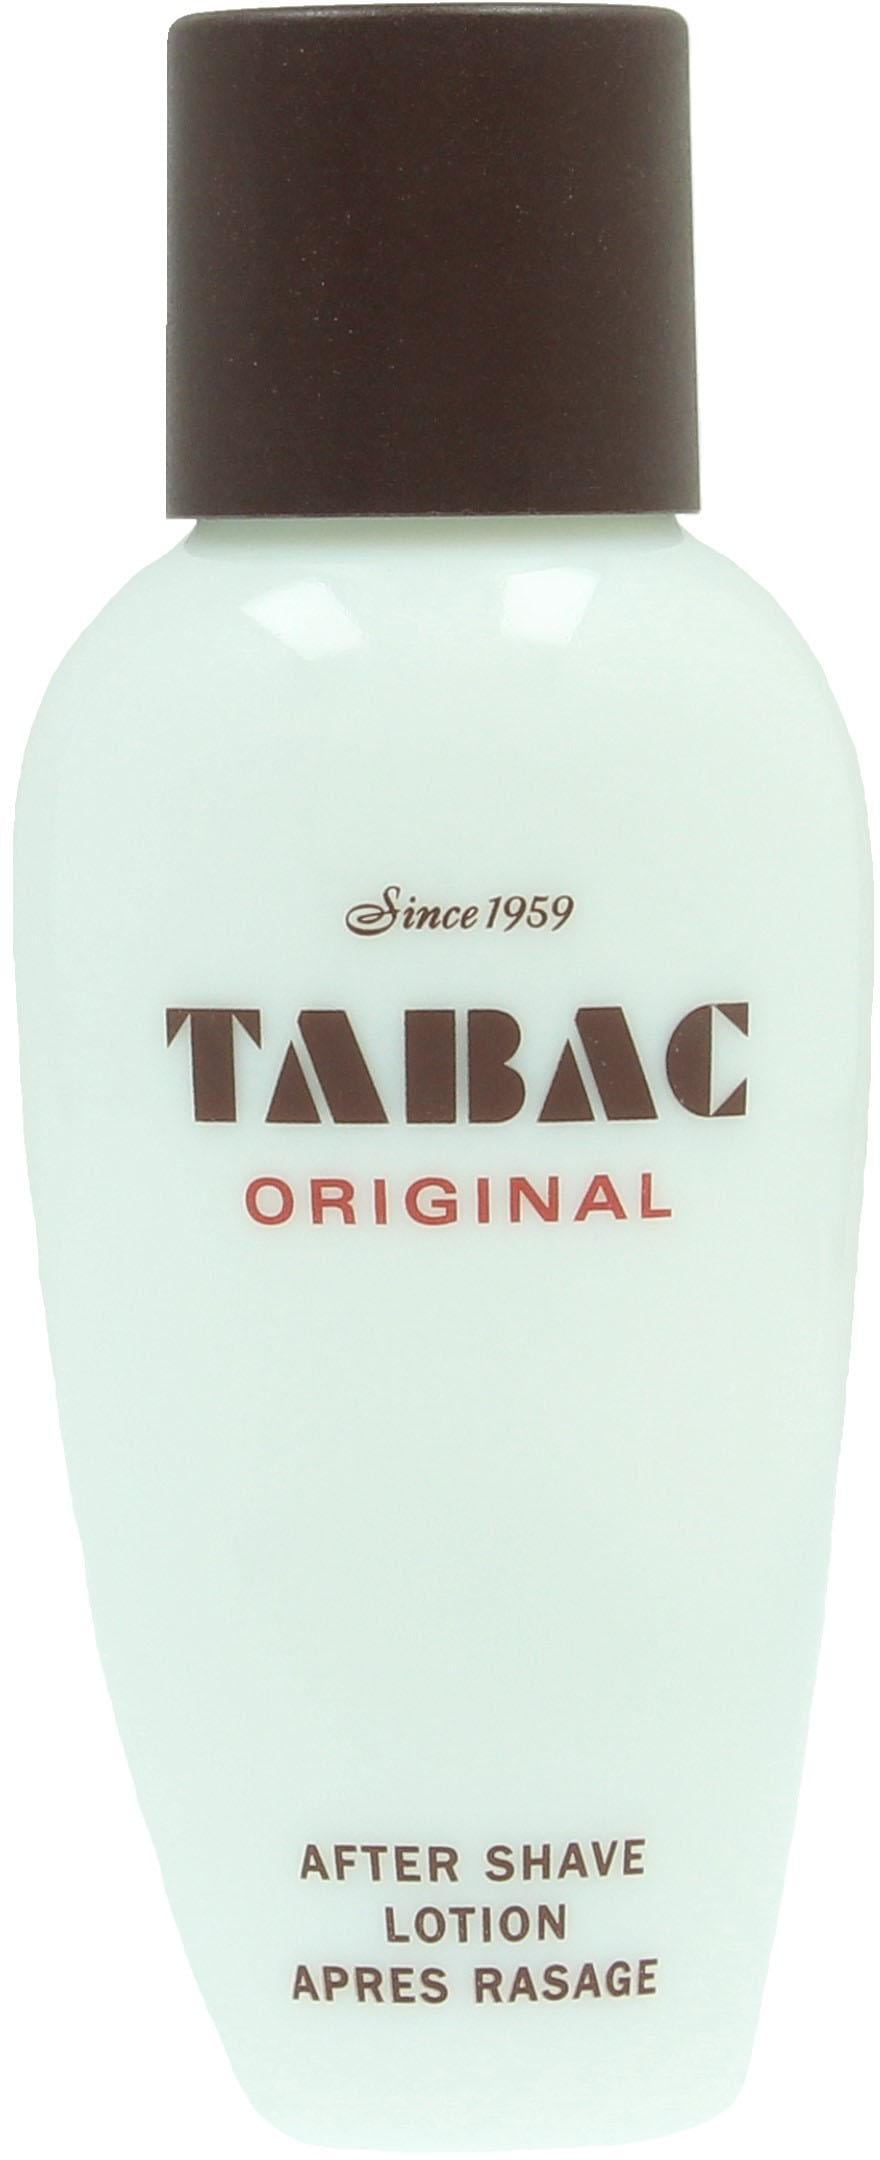 Tabac Original After-Shave kaufen günstig